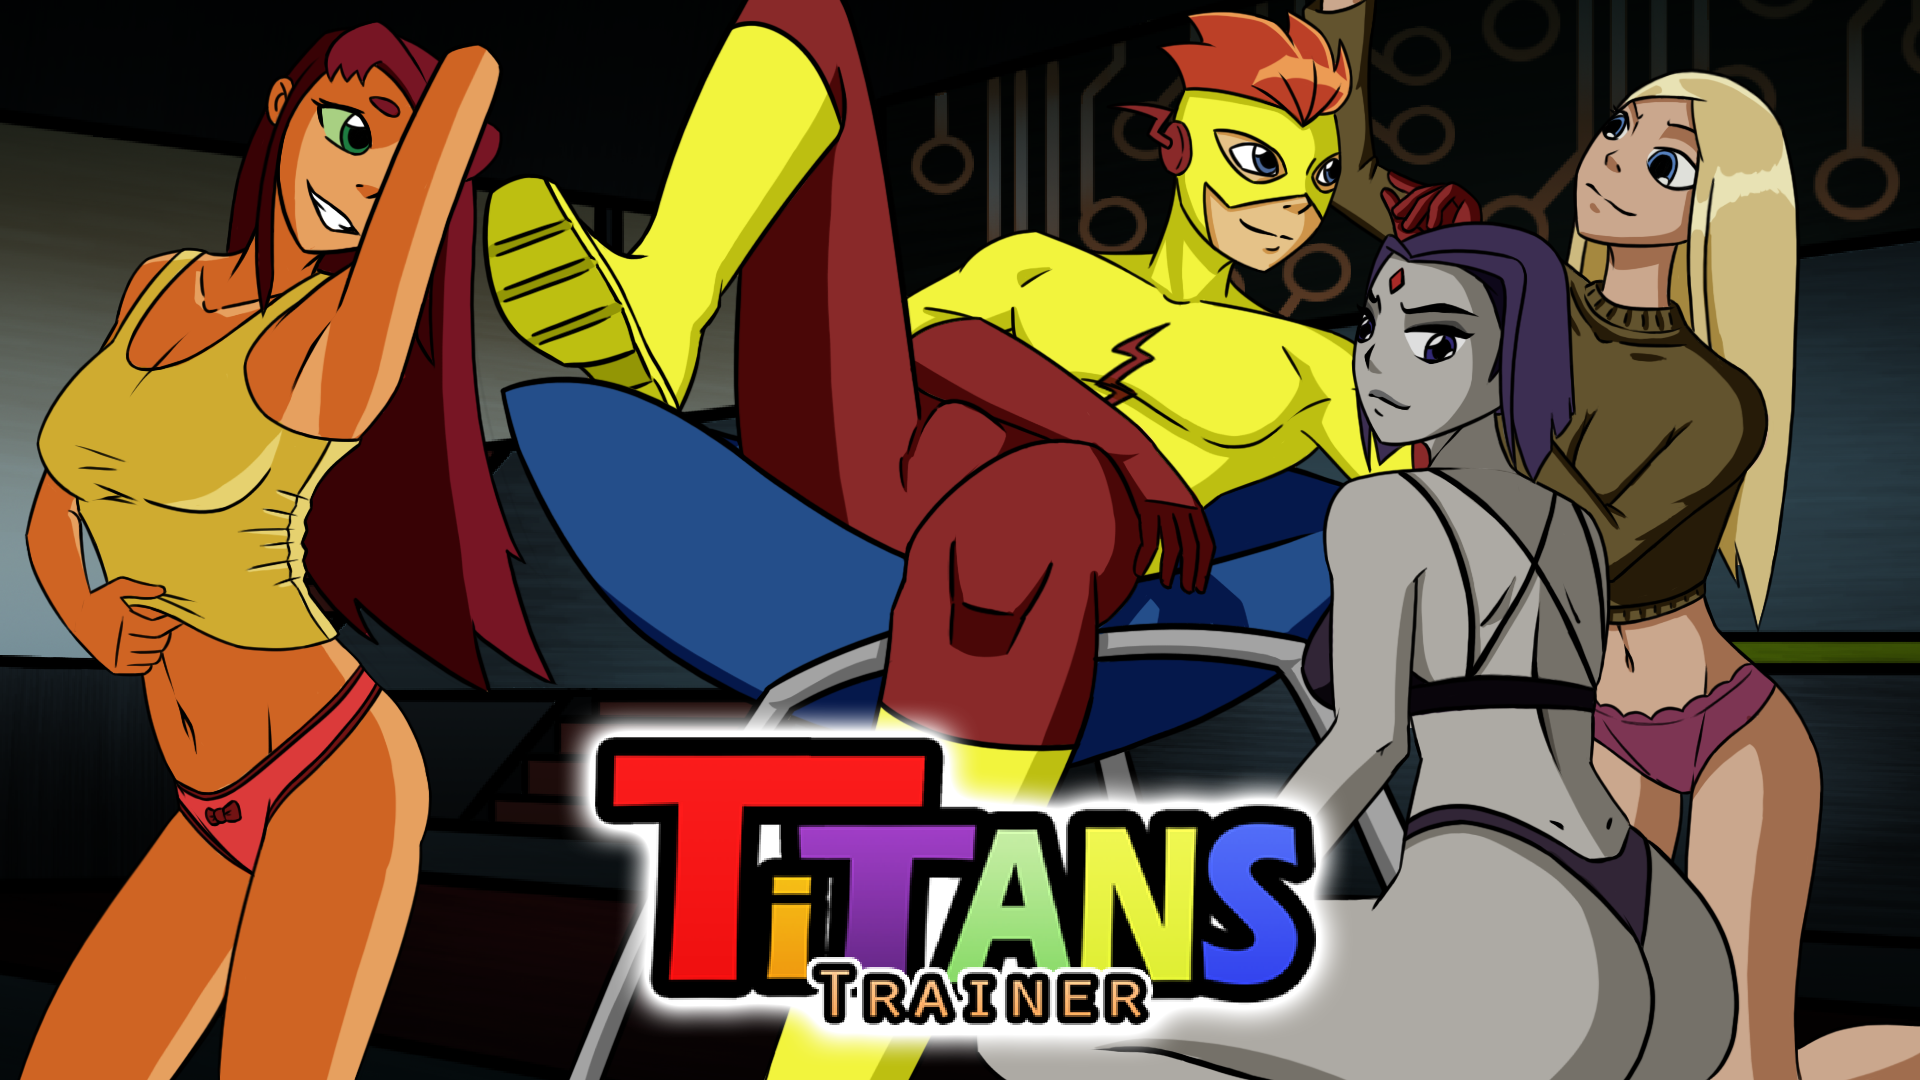 Titans Trainer (18+) by DeviousDev